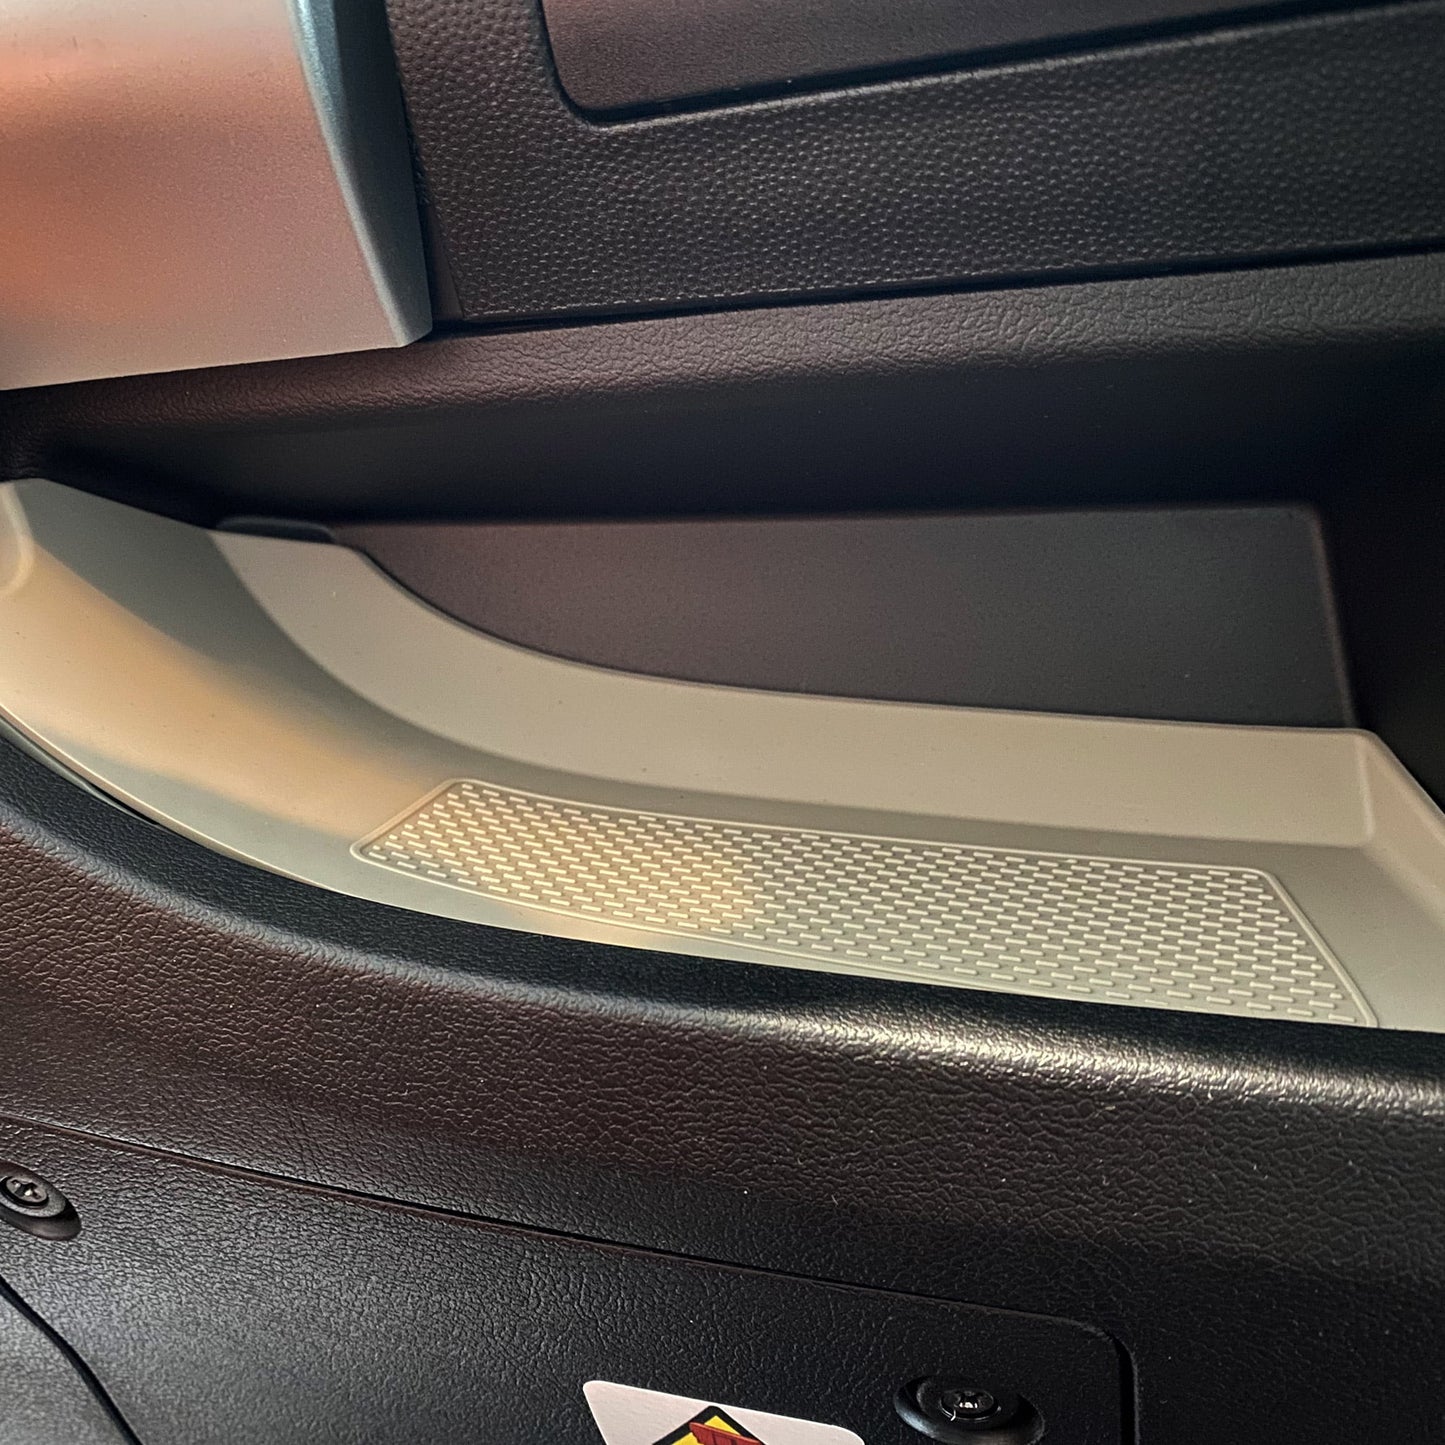 Fiat Ducato Lower Dashboard Rubber Inserts/Mats Light Grey LHD